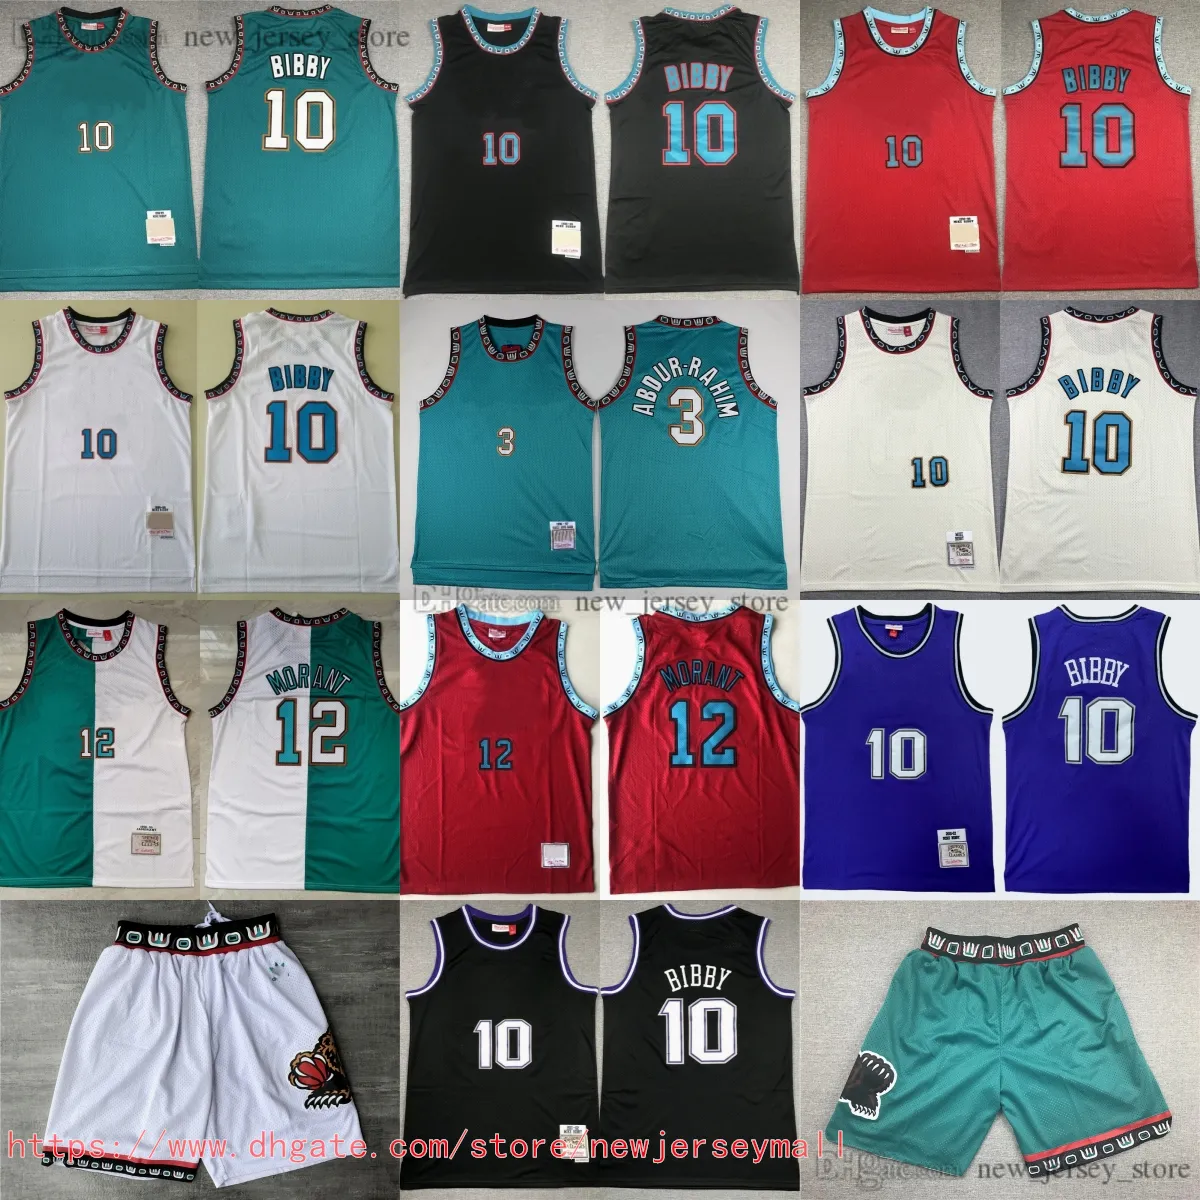 Classic Retro 1996-97 Basketball 3 Shareef Abdur-Rahim Jersey Throwback Classic 1998-99 Vintage 10 Mike Bibby Jersey Short 12 Ja Morant Breathable Sports Shirts